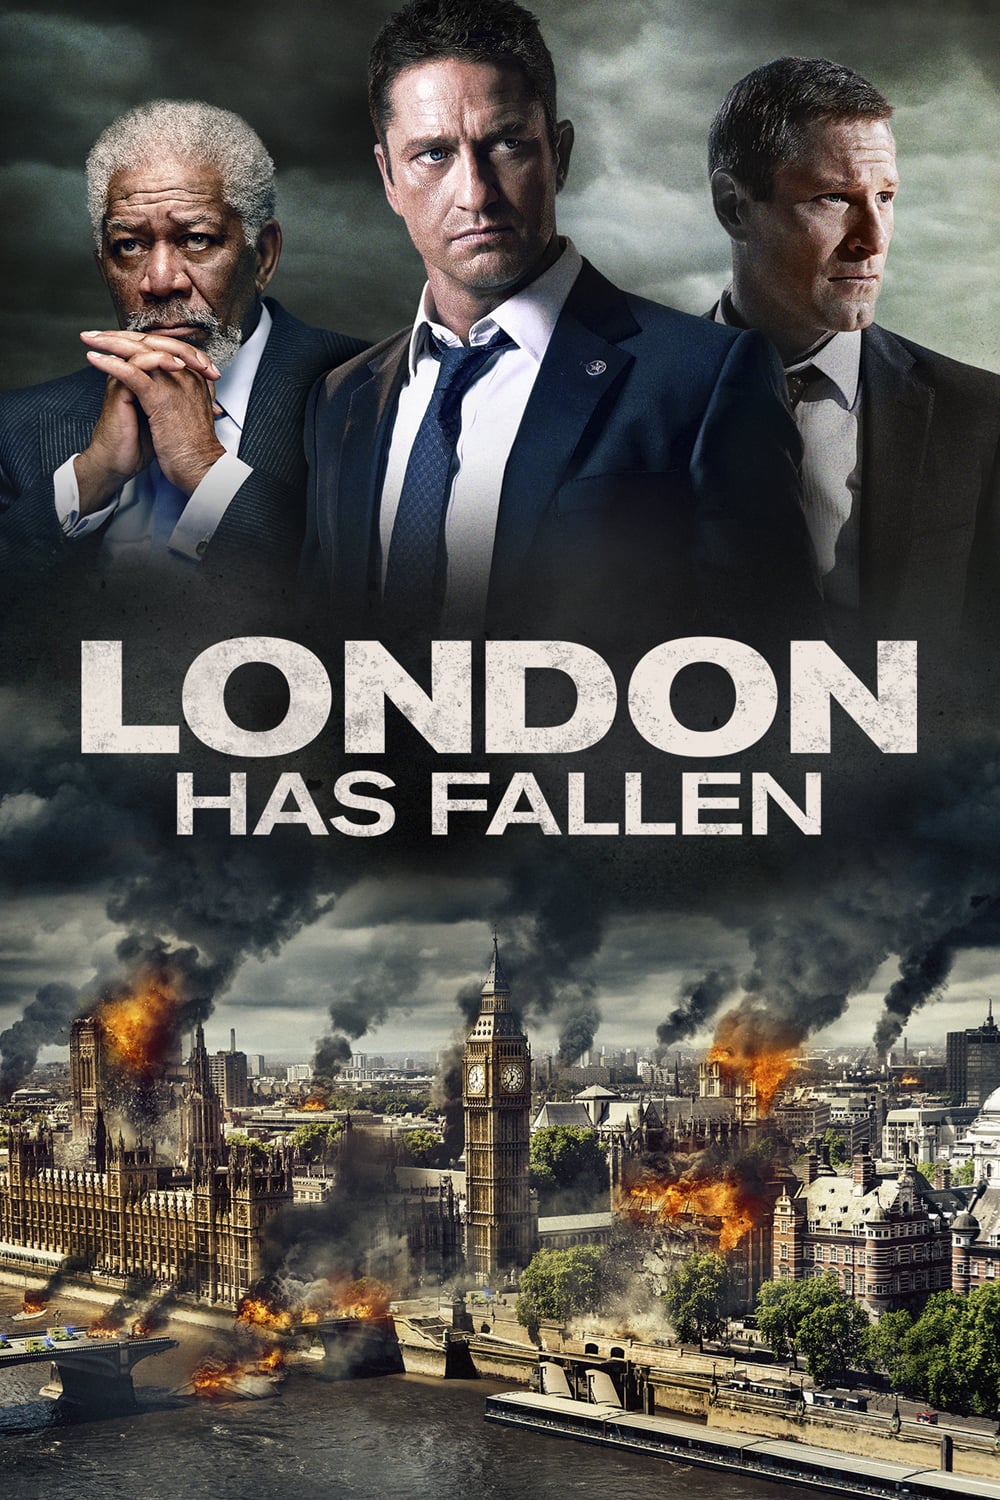 london has fallen full movie download mp4